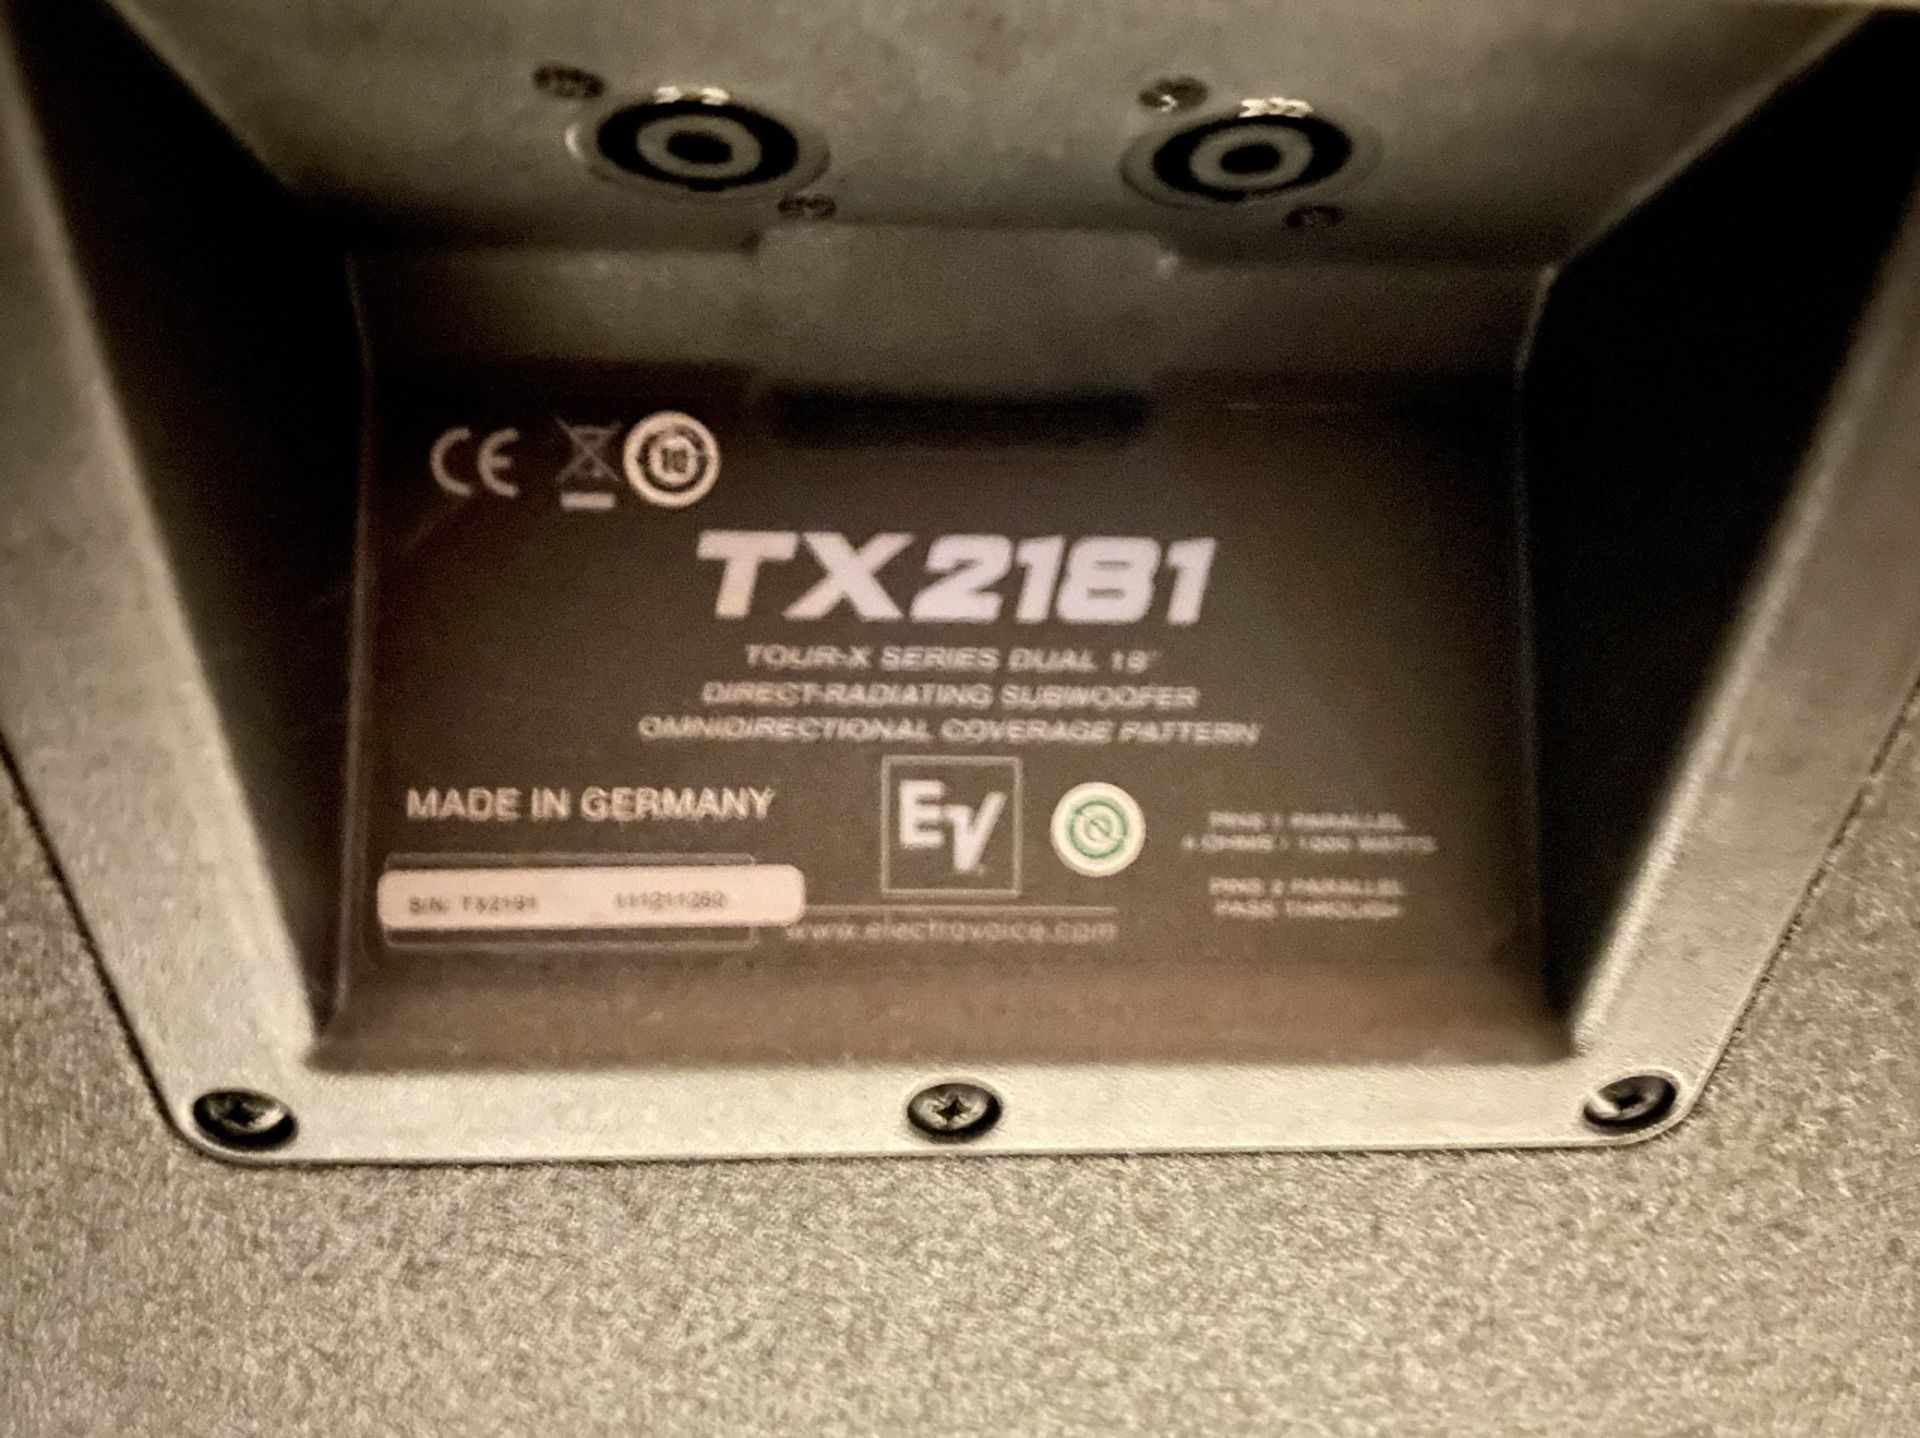 Electro Voice TX 2181 Dual 18 Passive Subwoofer x - Image 3 of 3